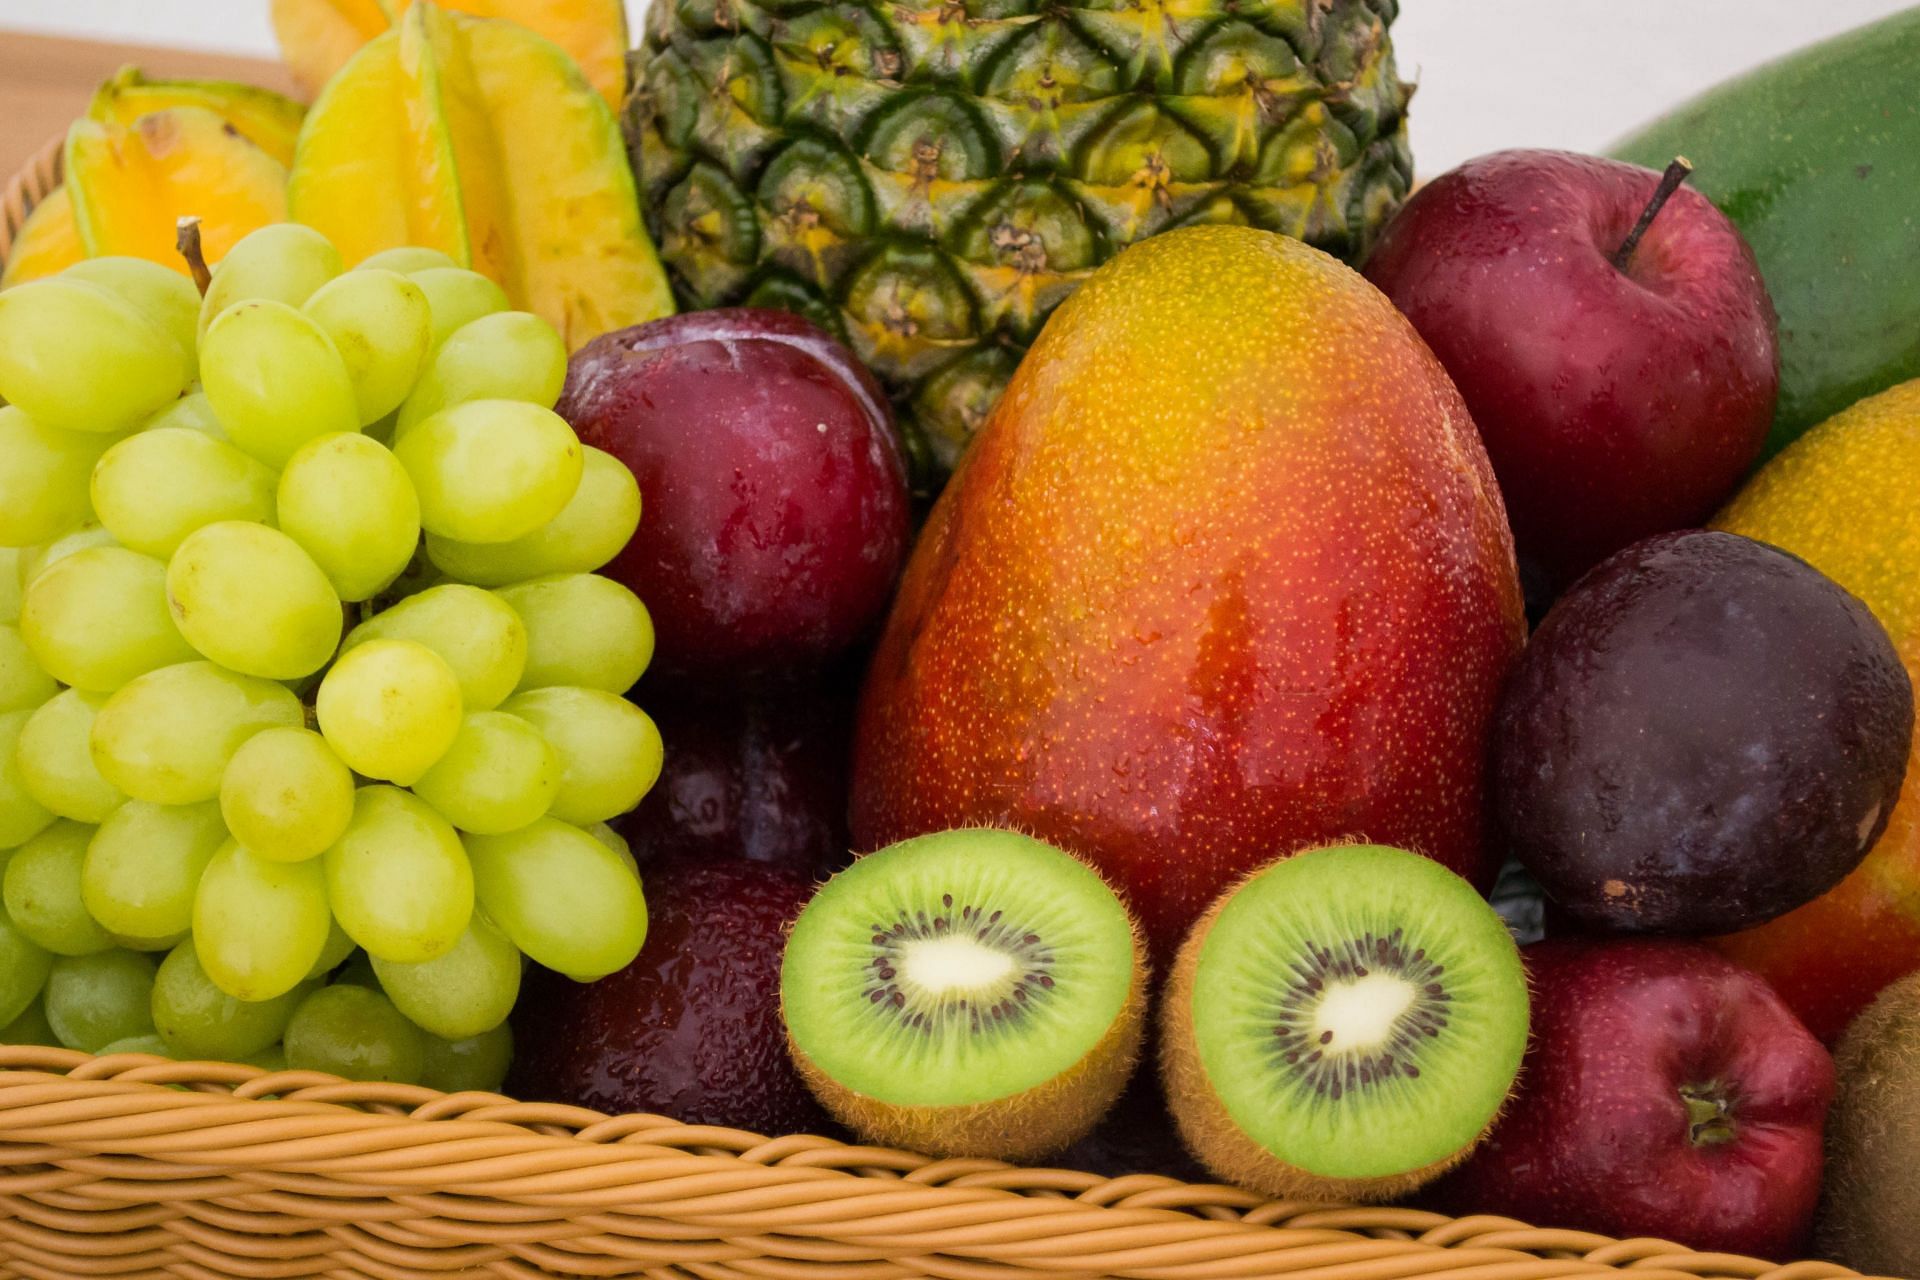 Fruits contain high amount of fiber. (Image via Unsplash/ Jonas Kakaroto)